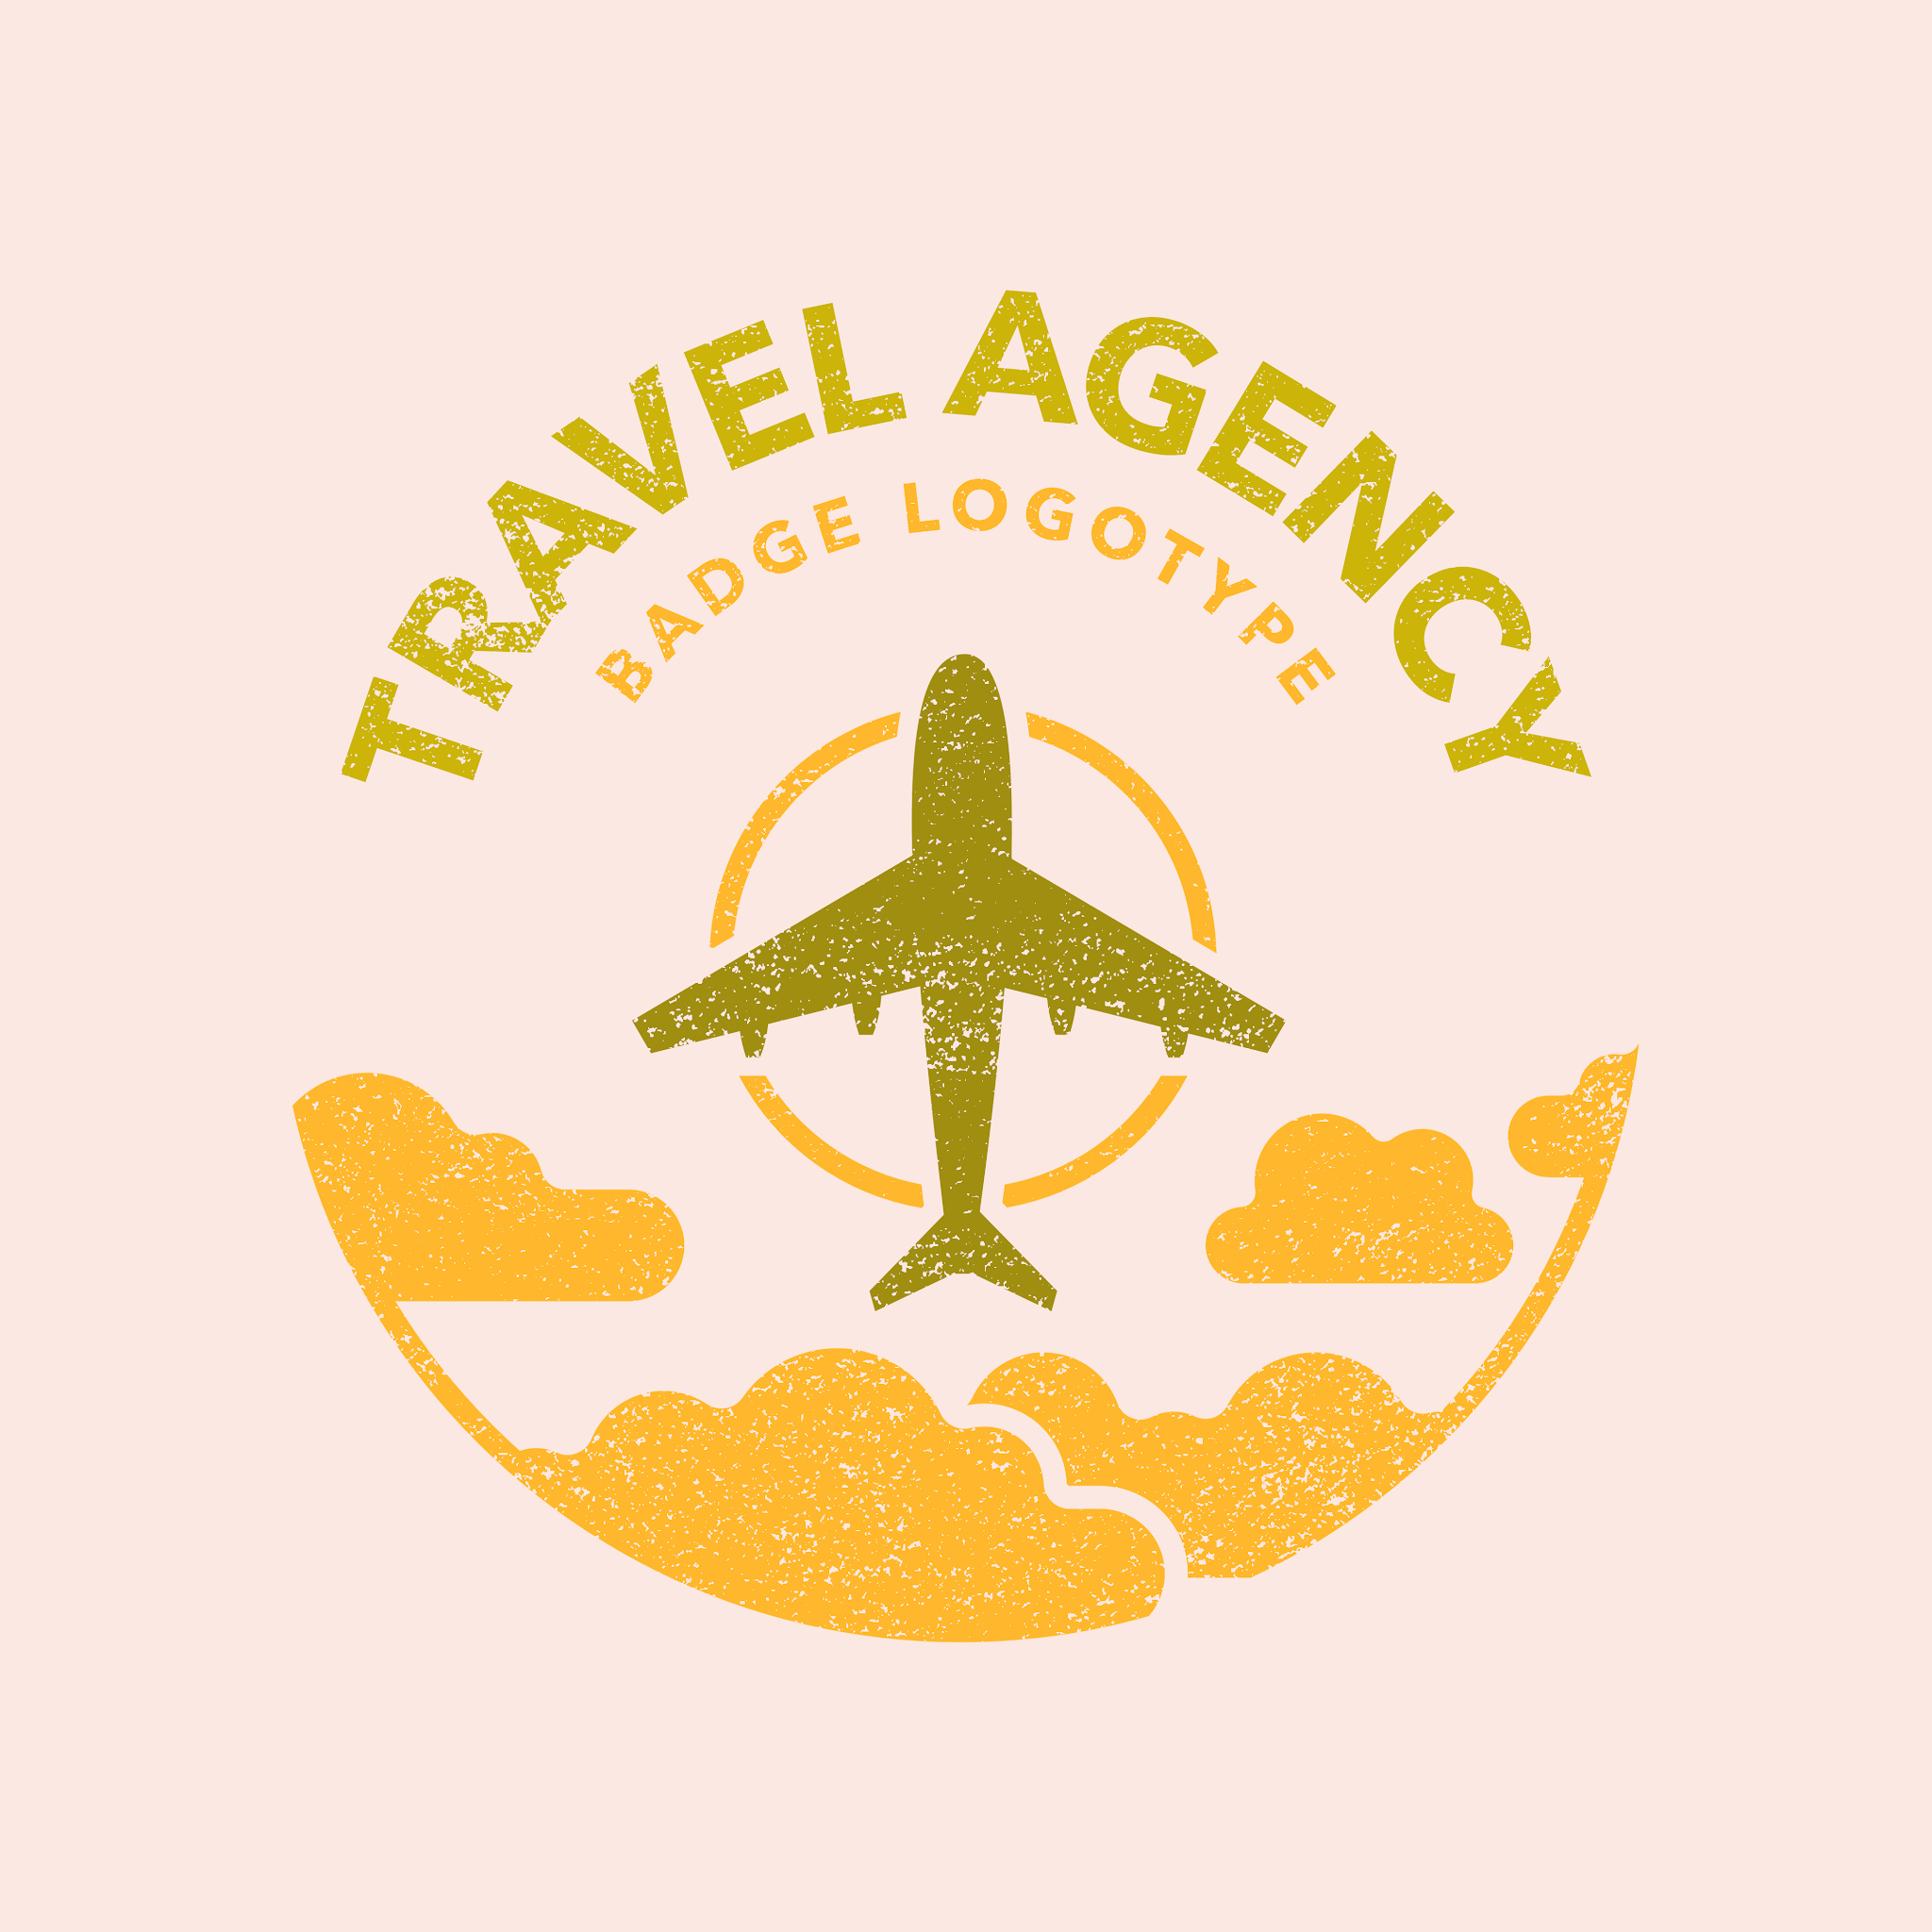 travel agency clipart logo